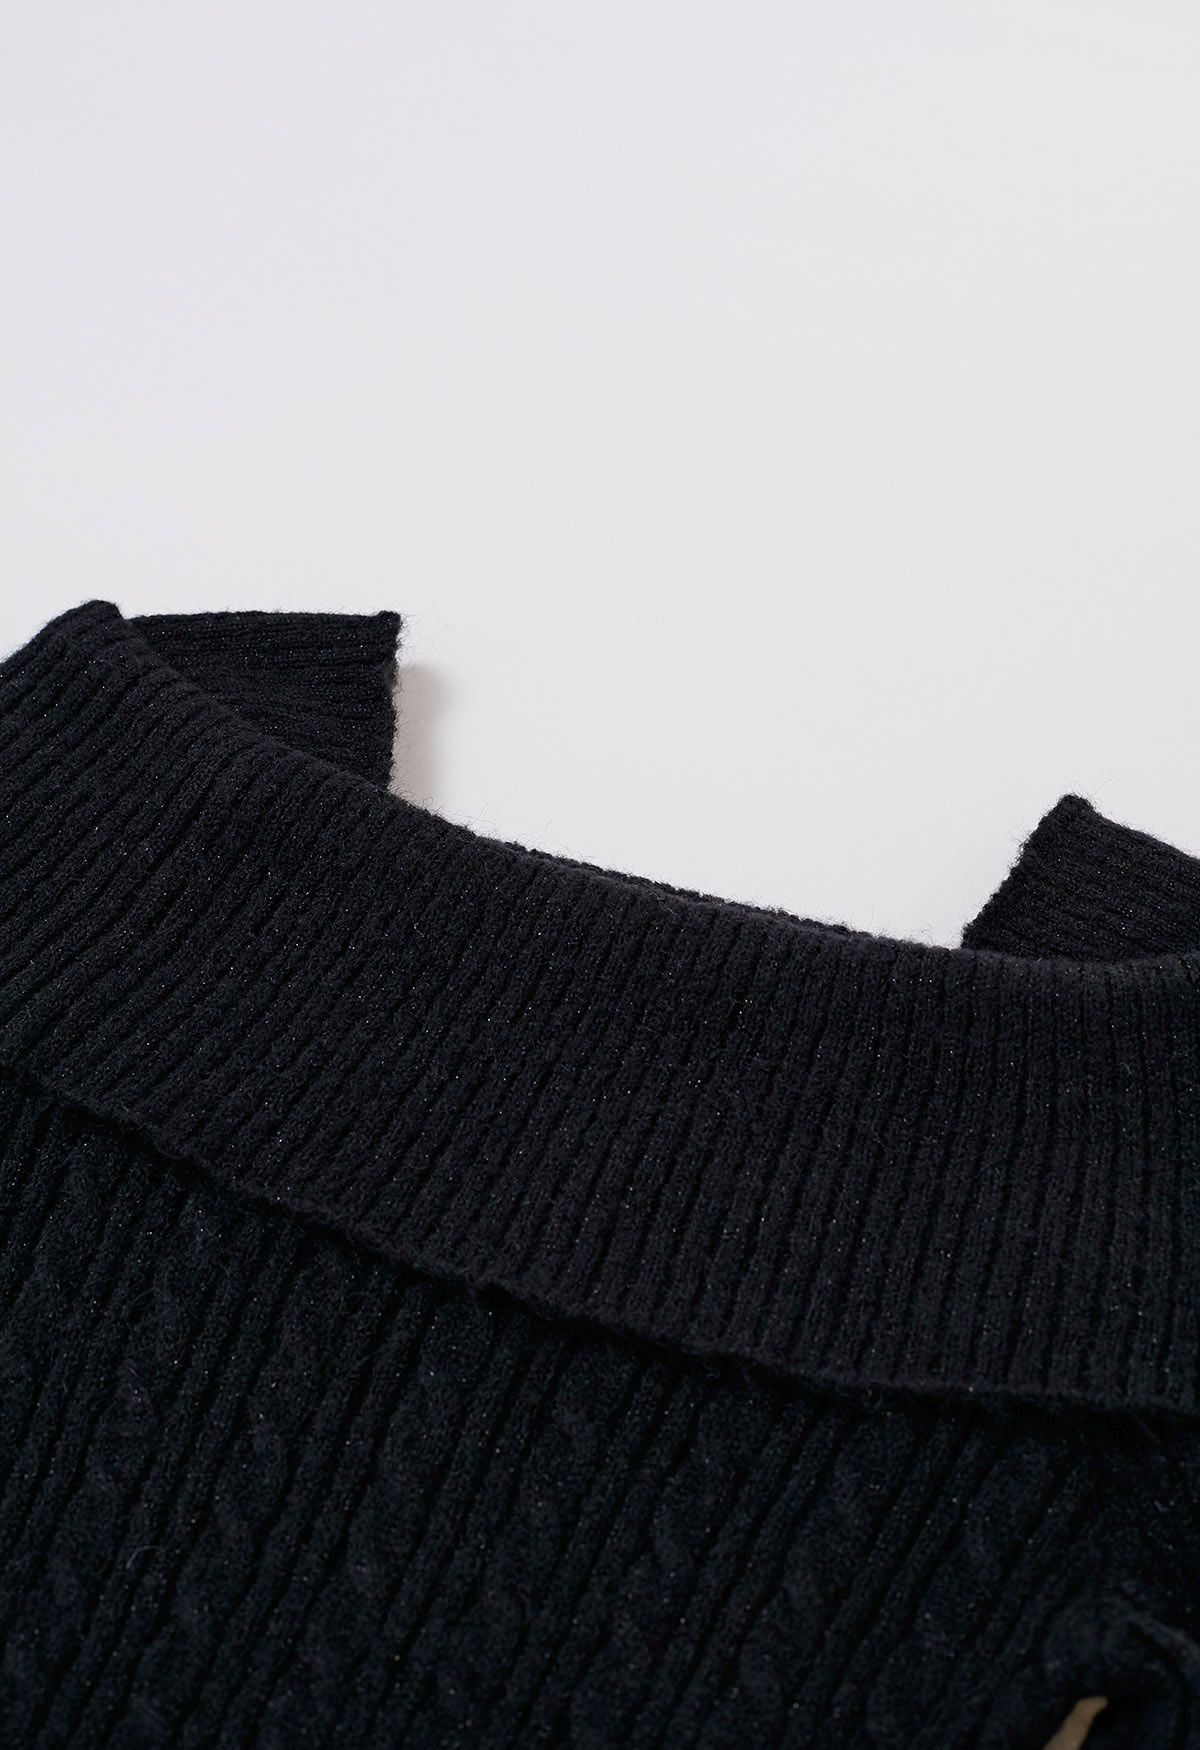 Folded Shoulder Cable Knit Top in Black